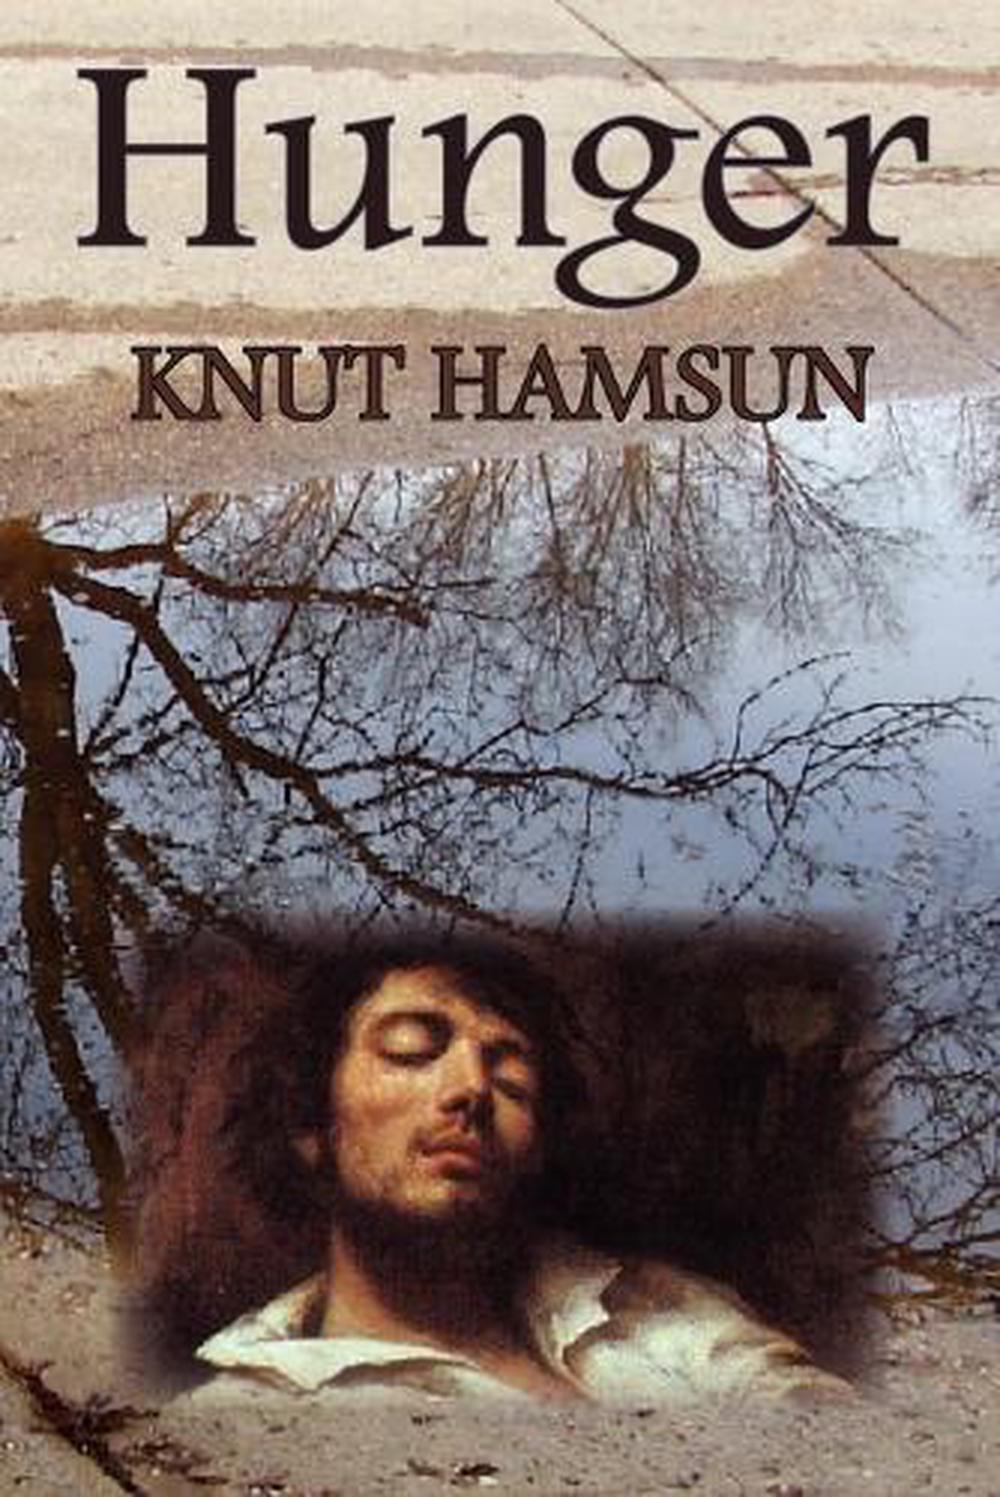 Mysteries by Knut Hamsun